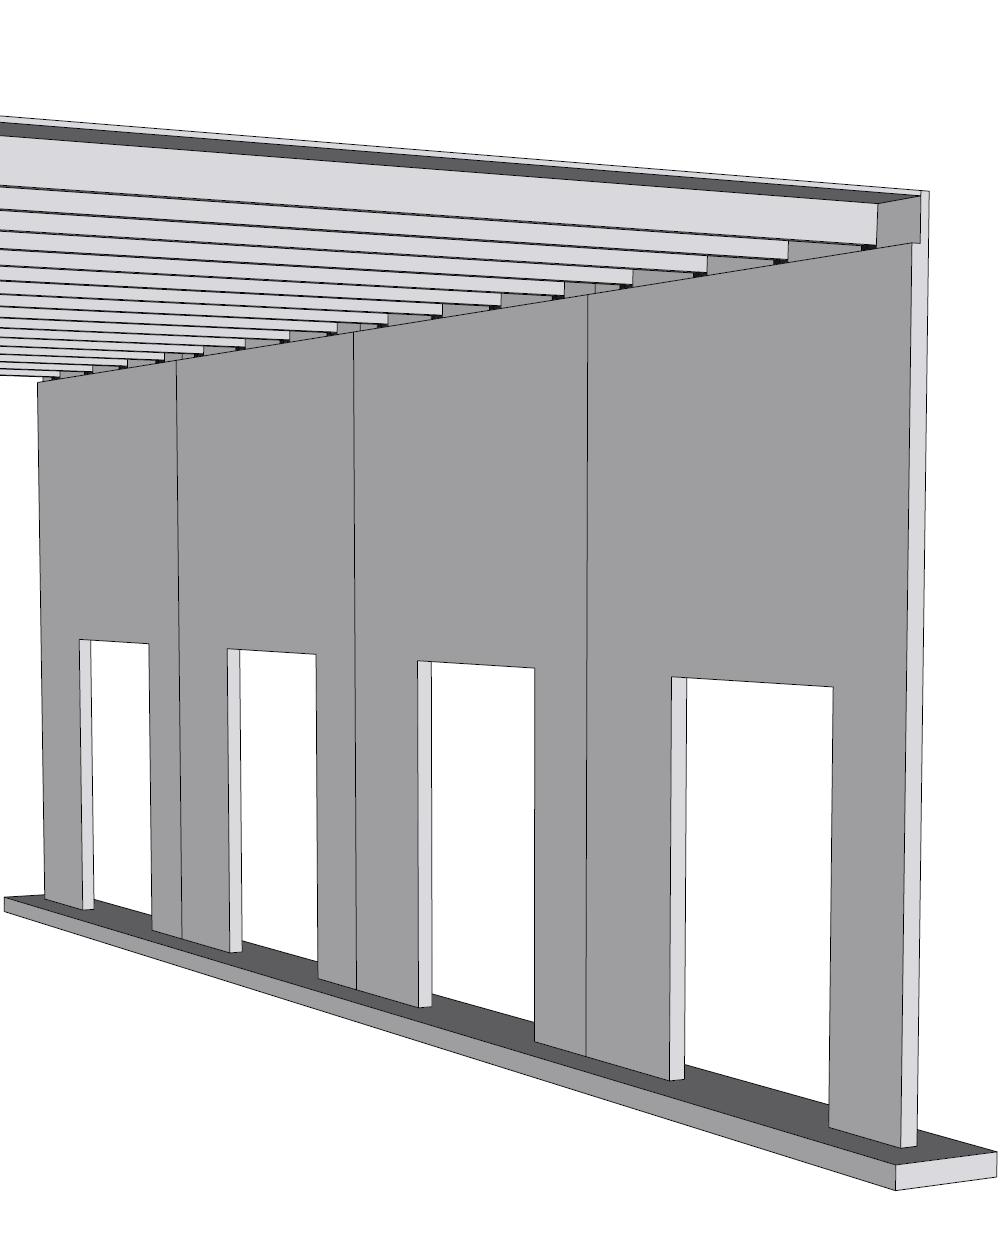 Reinforced Concrete Tilt-Up Wall Panel